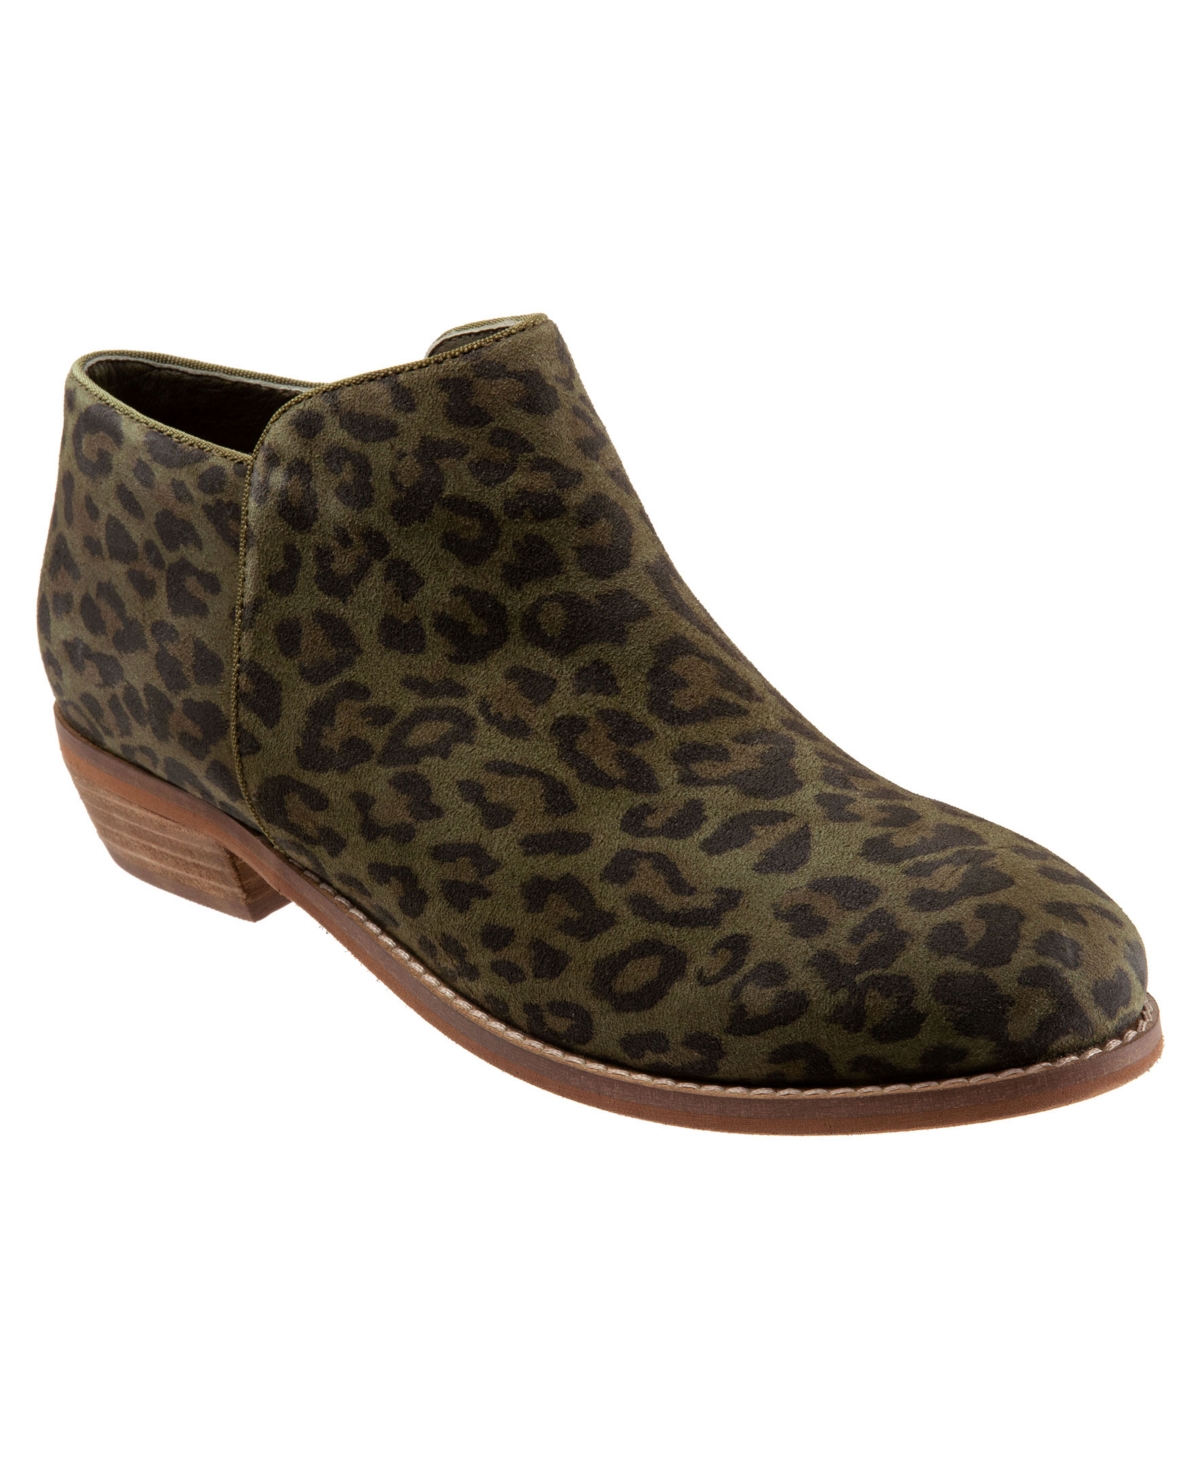 Softwalk Rocklin Booties Women's Shoes In Loden Cheetah Suede